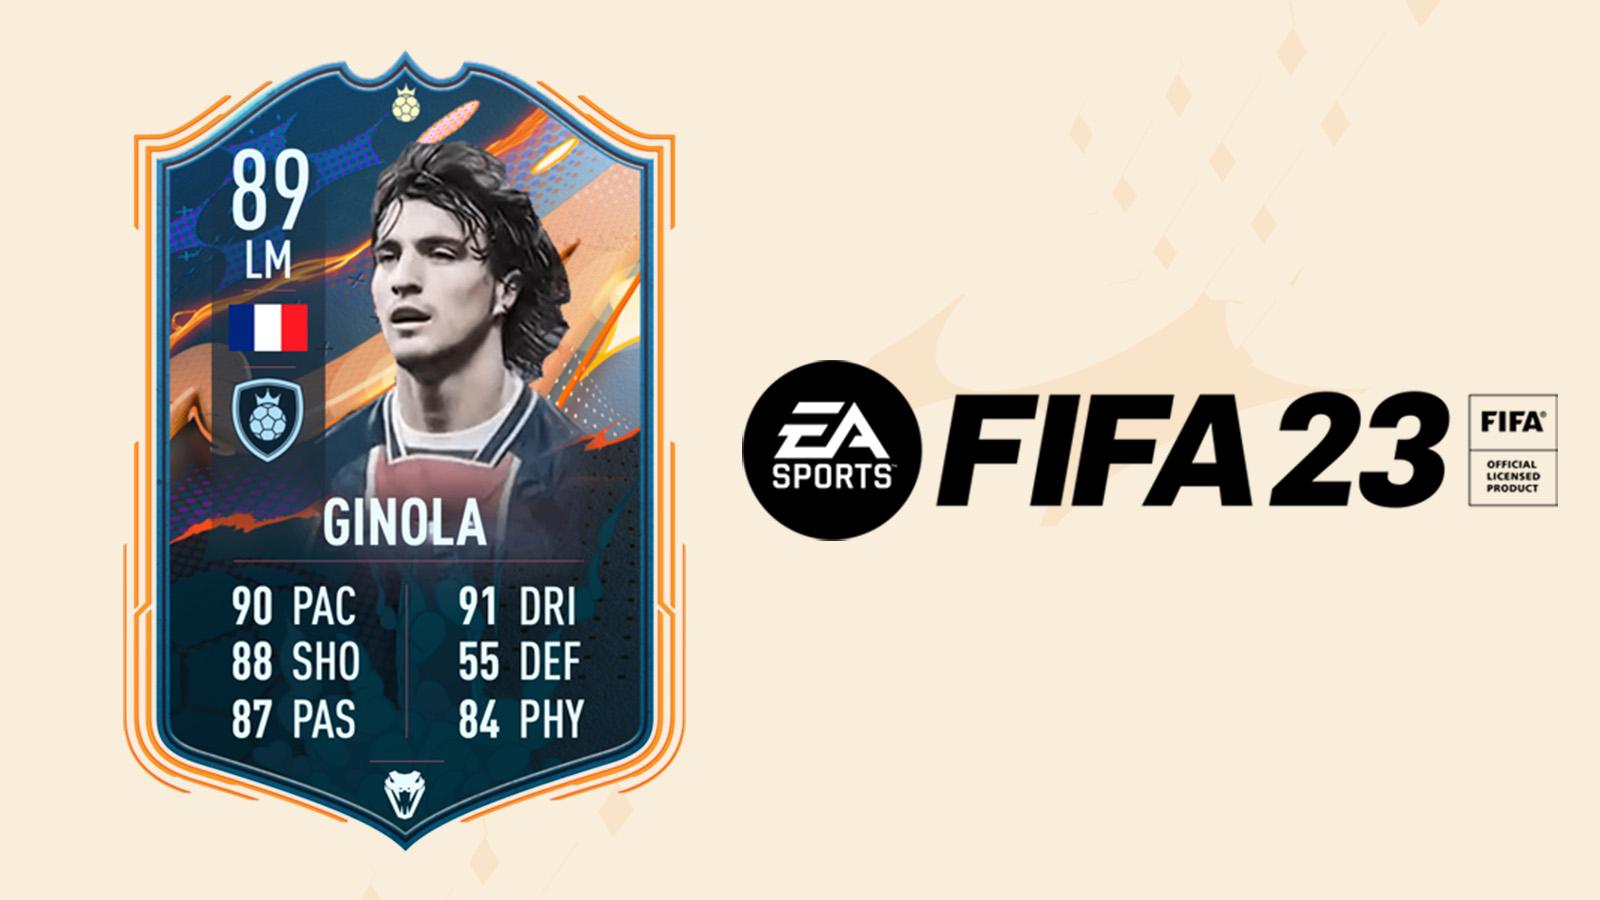 FIFA 23 logo next to David Ginola hero card